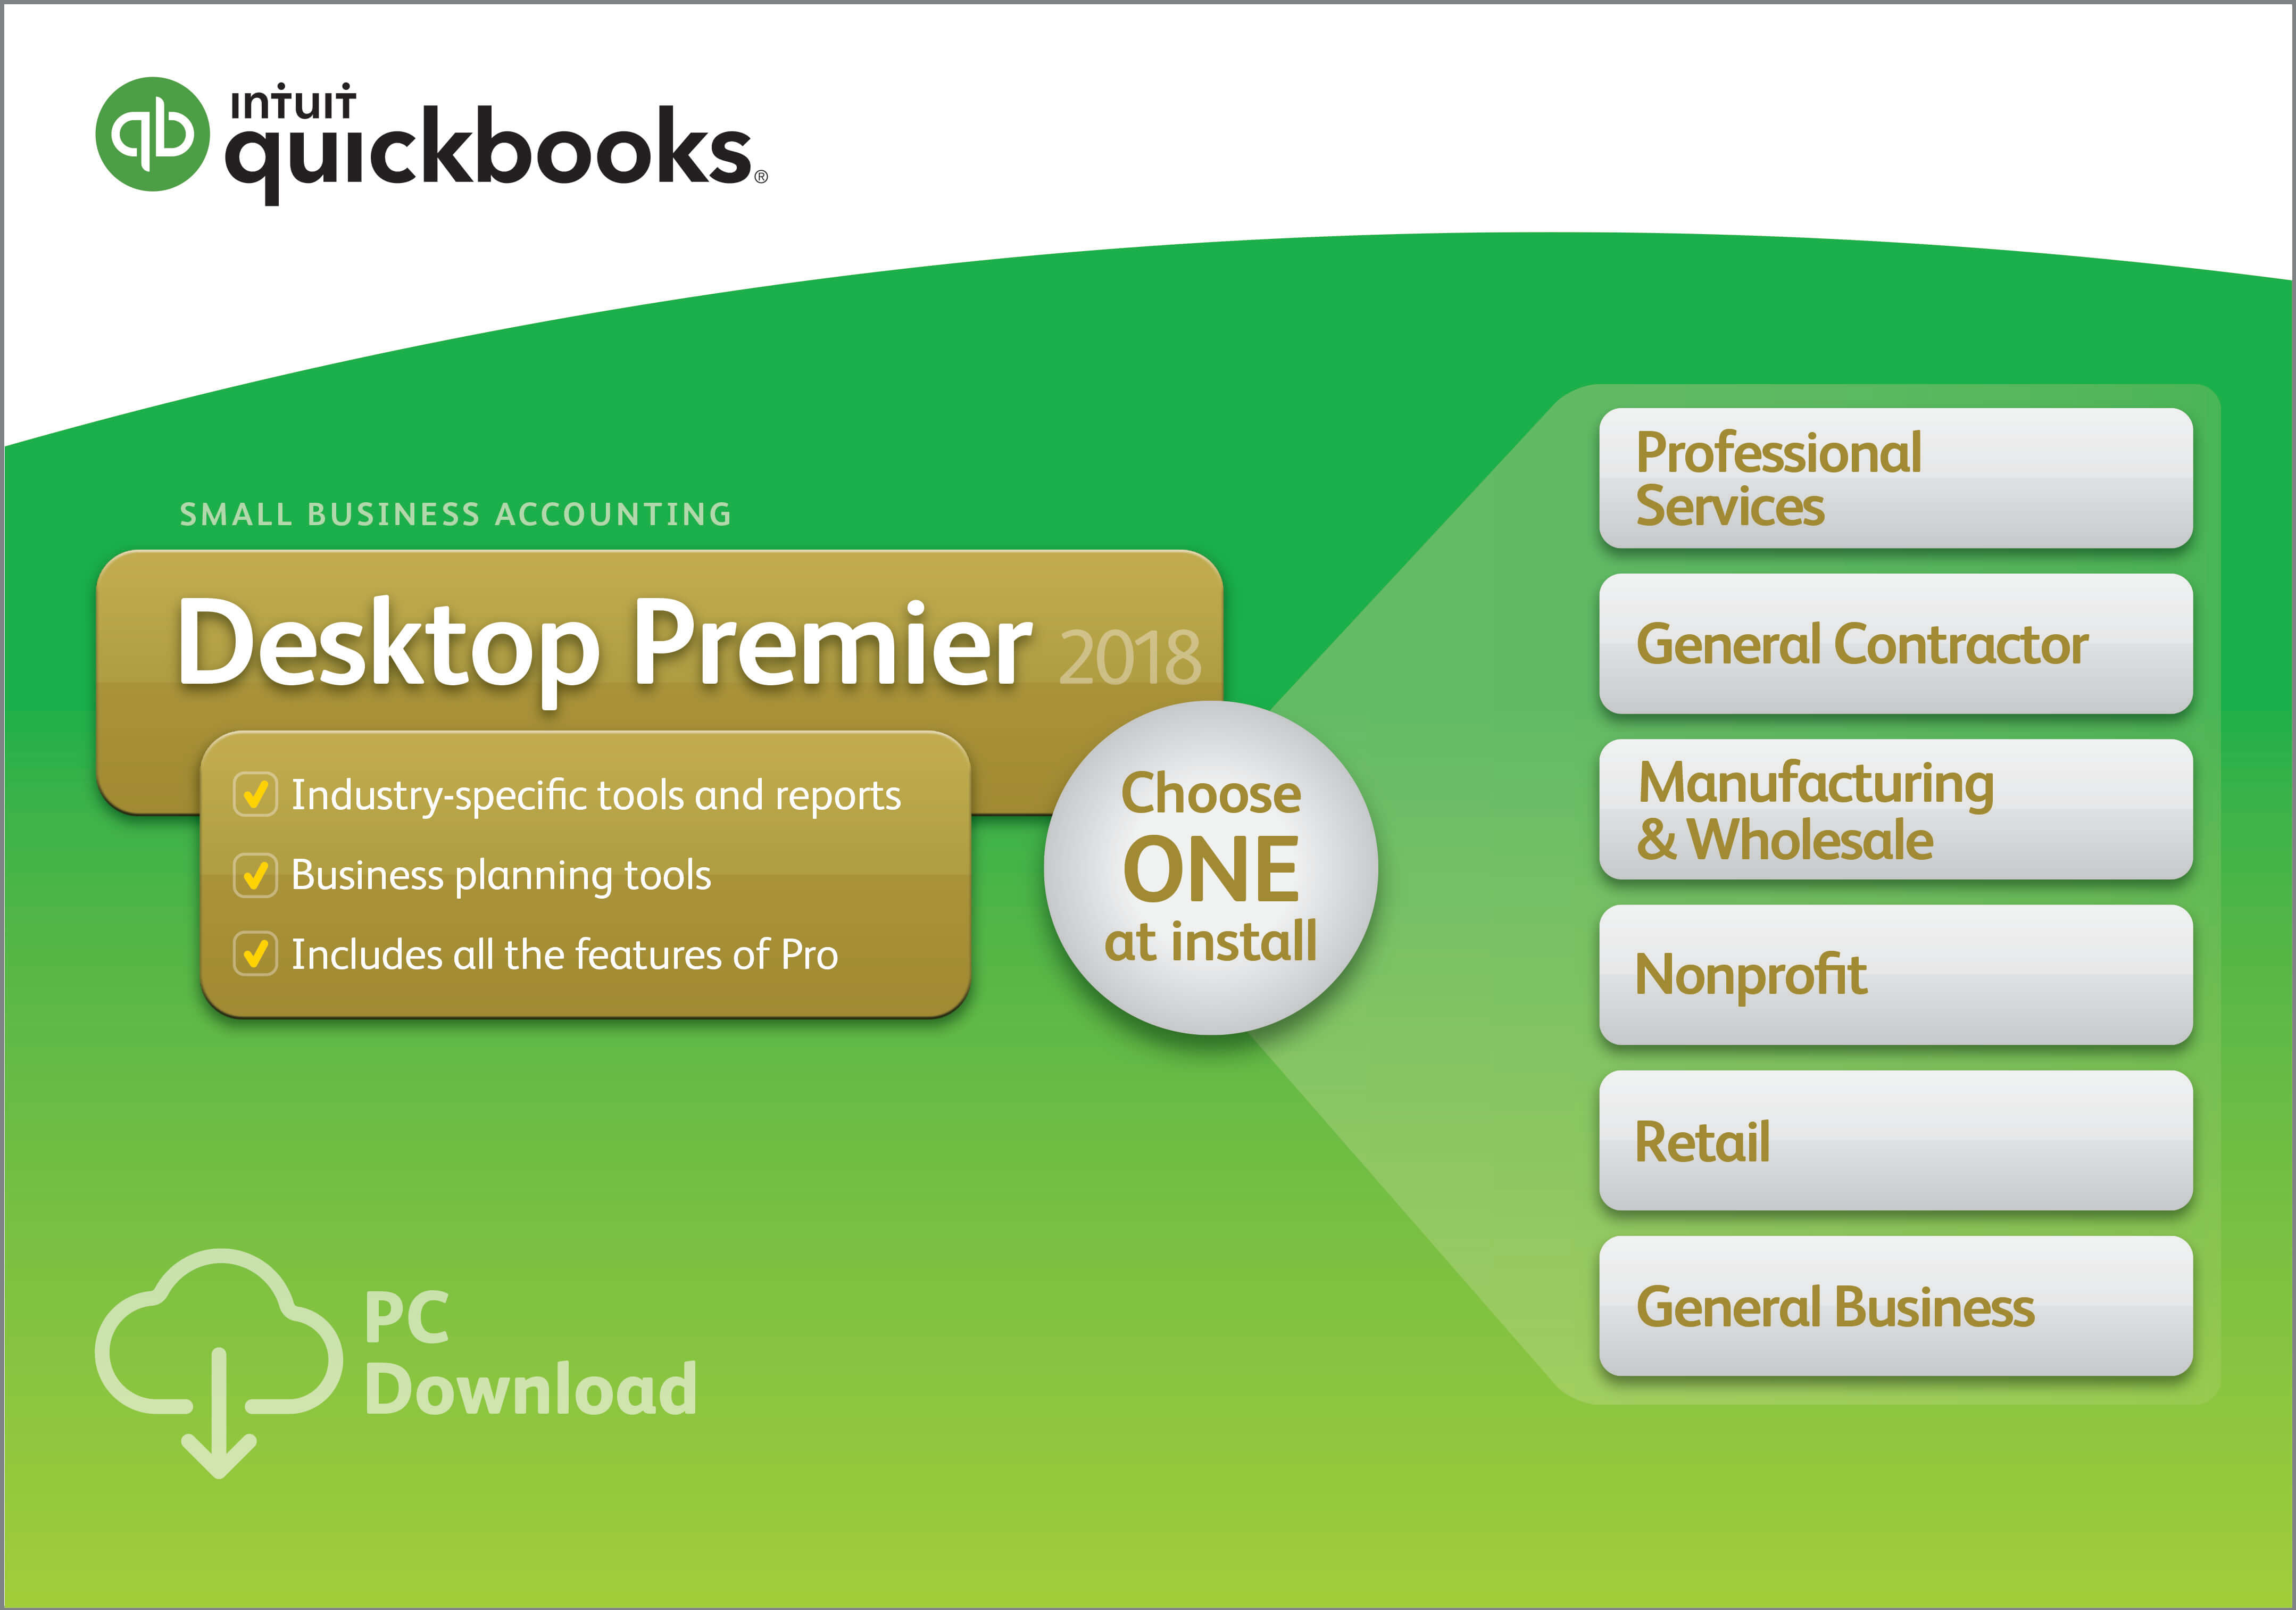 upgrading quickbooks for mac 2015